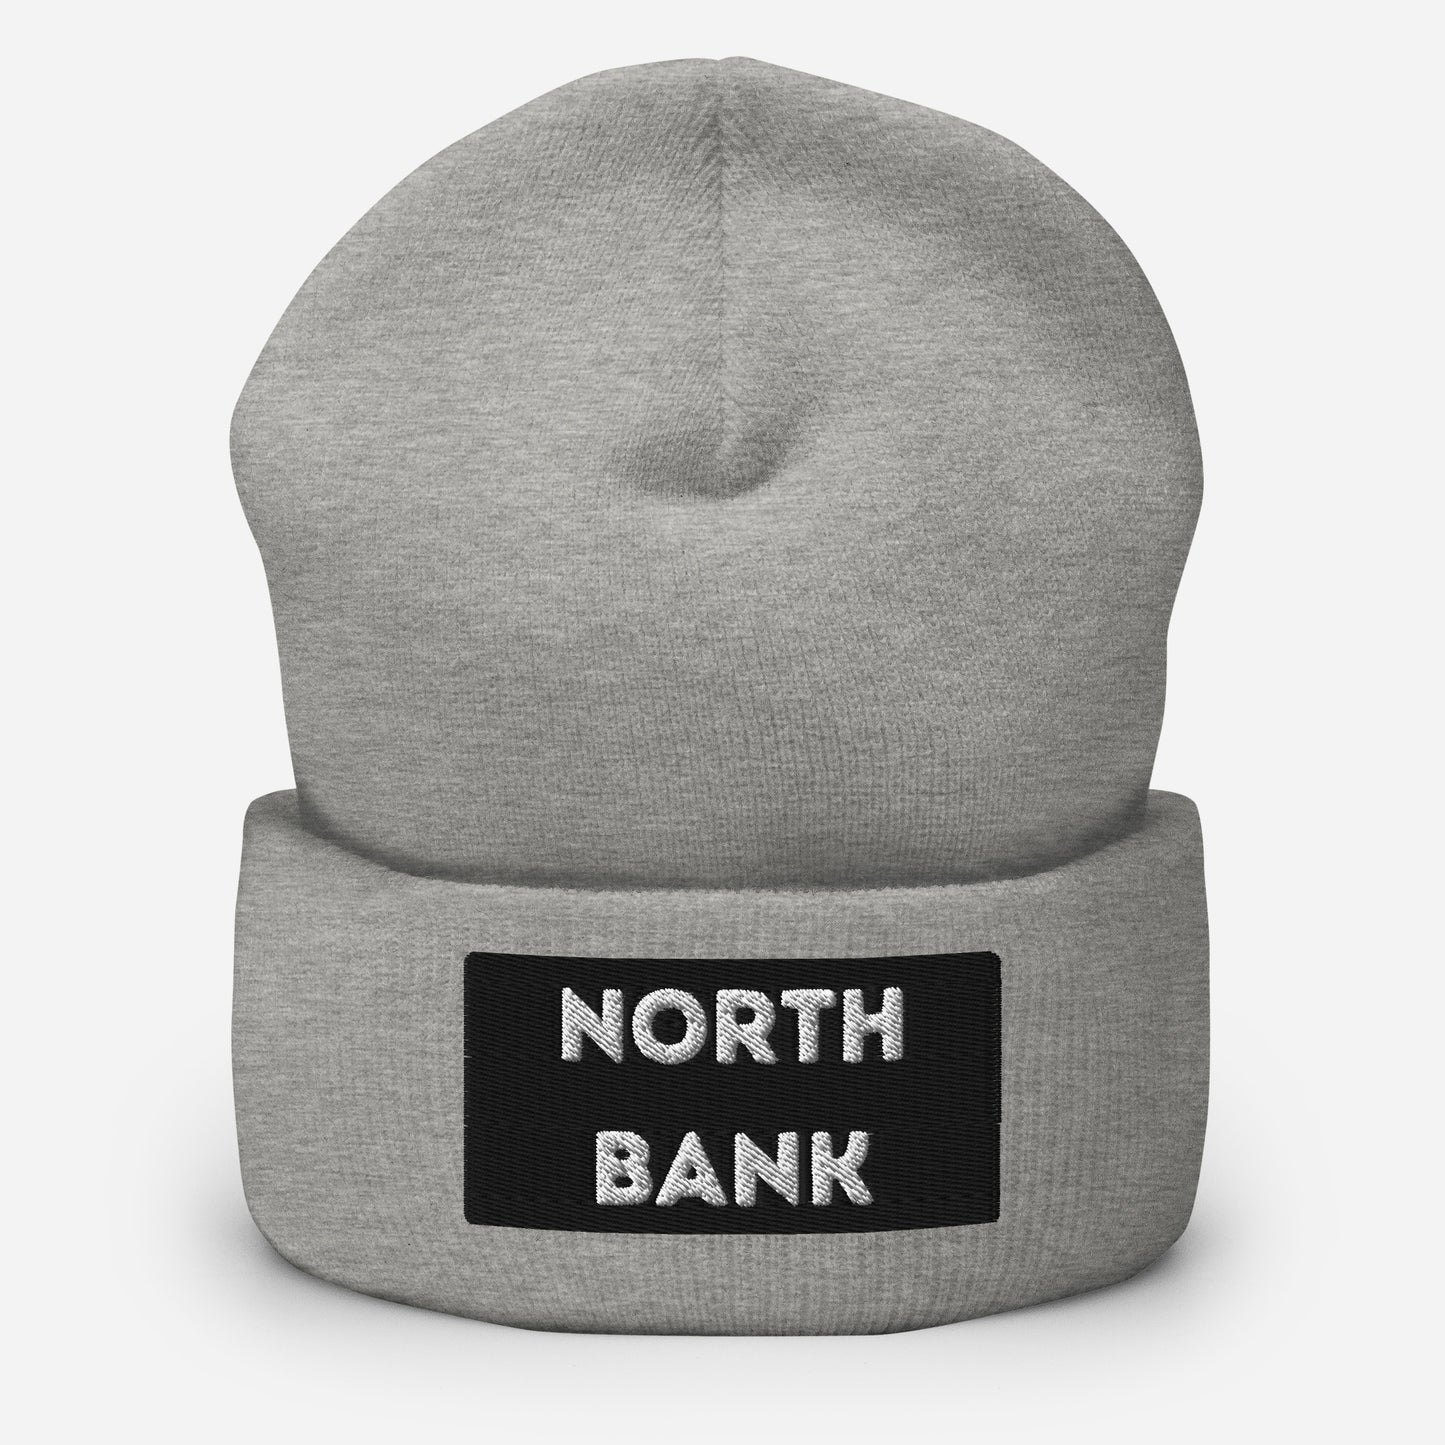 North Bank Cuffed Beanie Hat